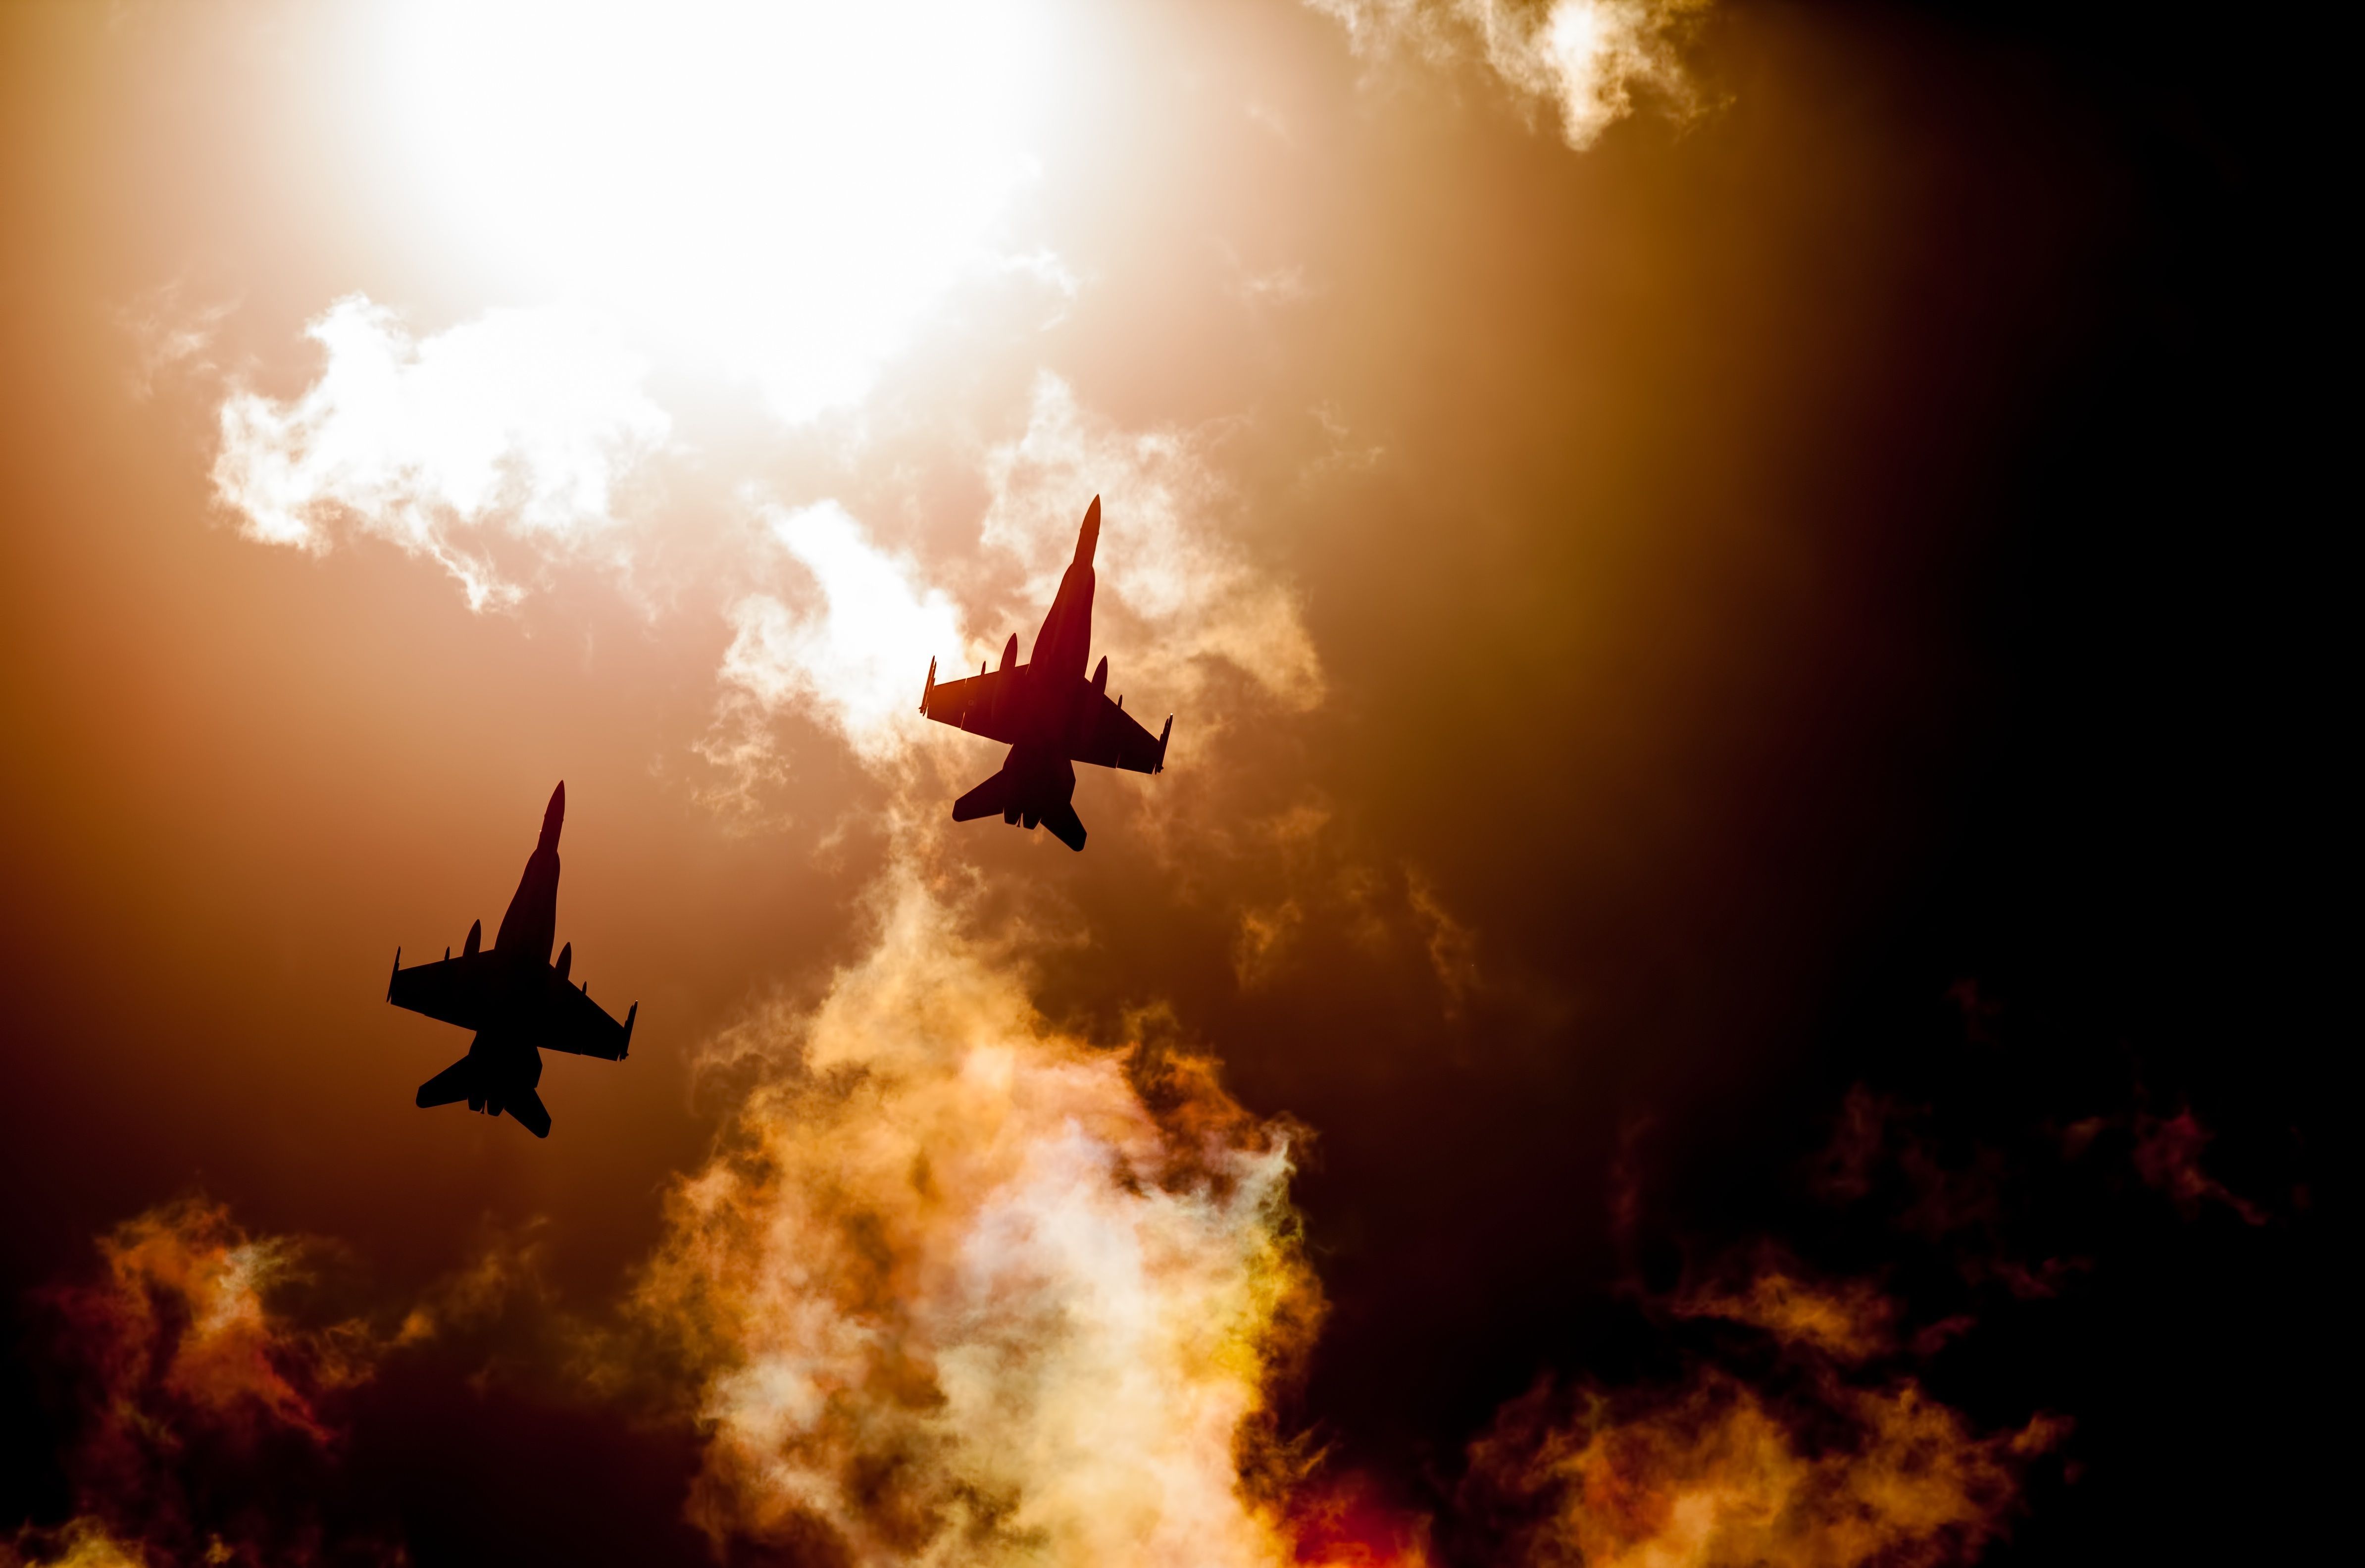 Jet Fighters, HD Planes, 4k Wallpaper, Image, Background